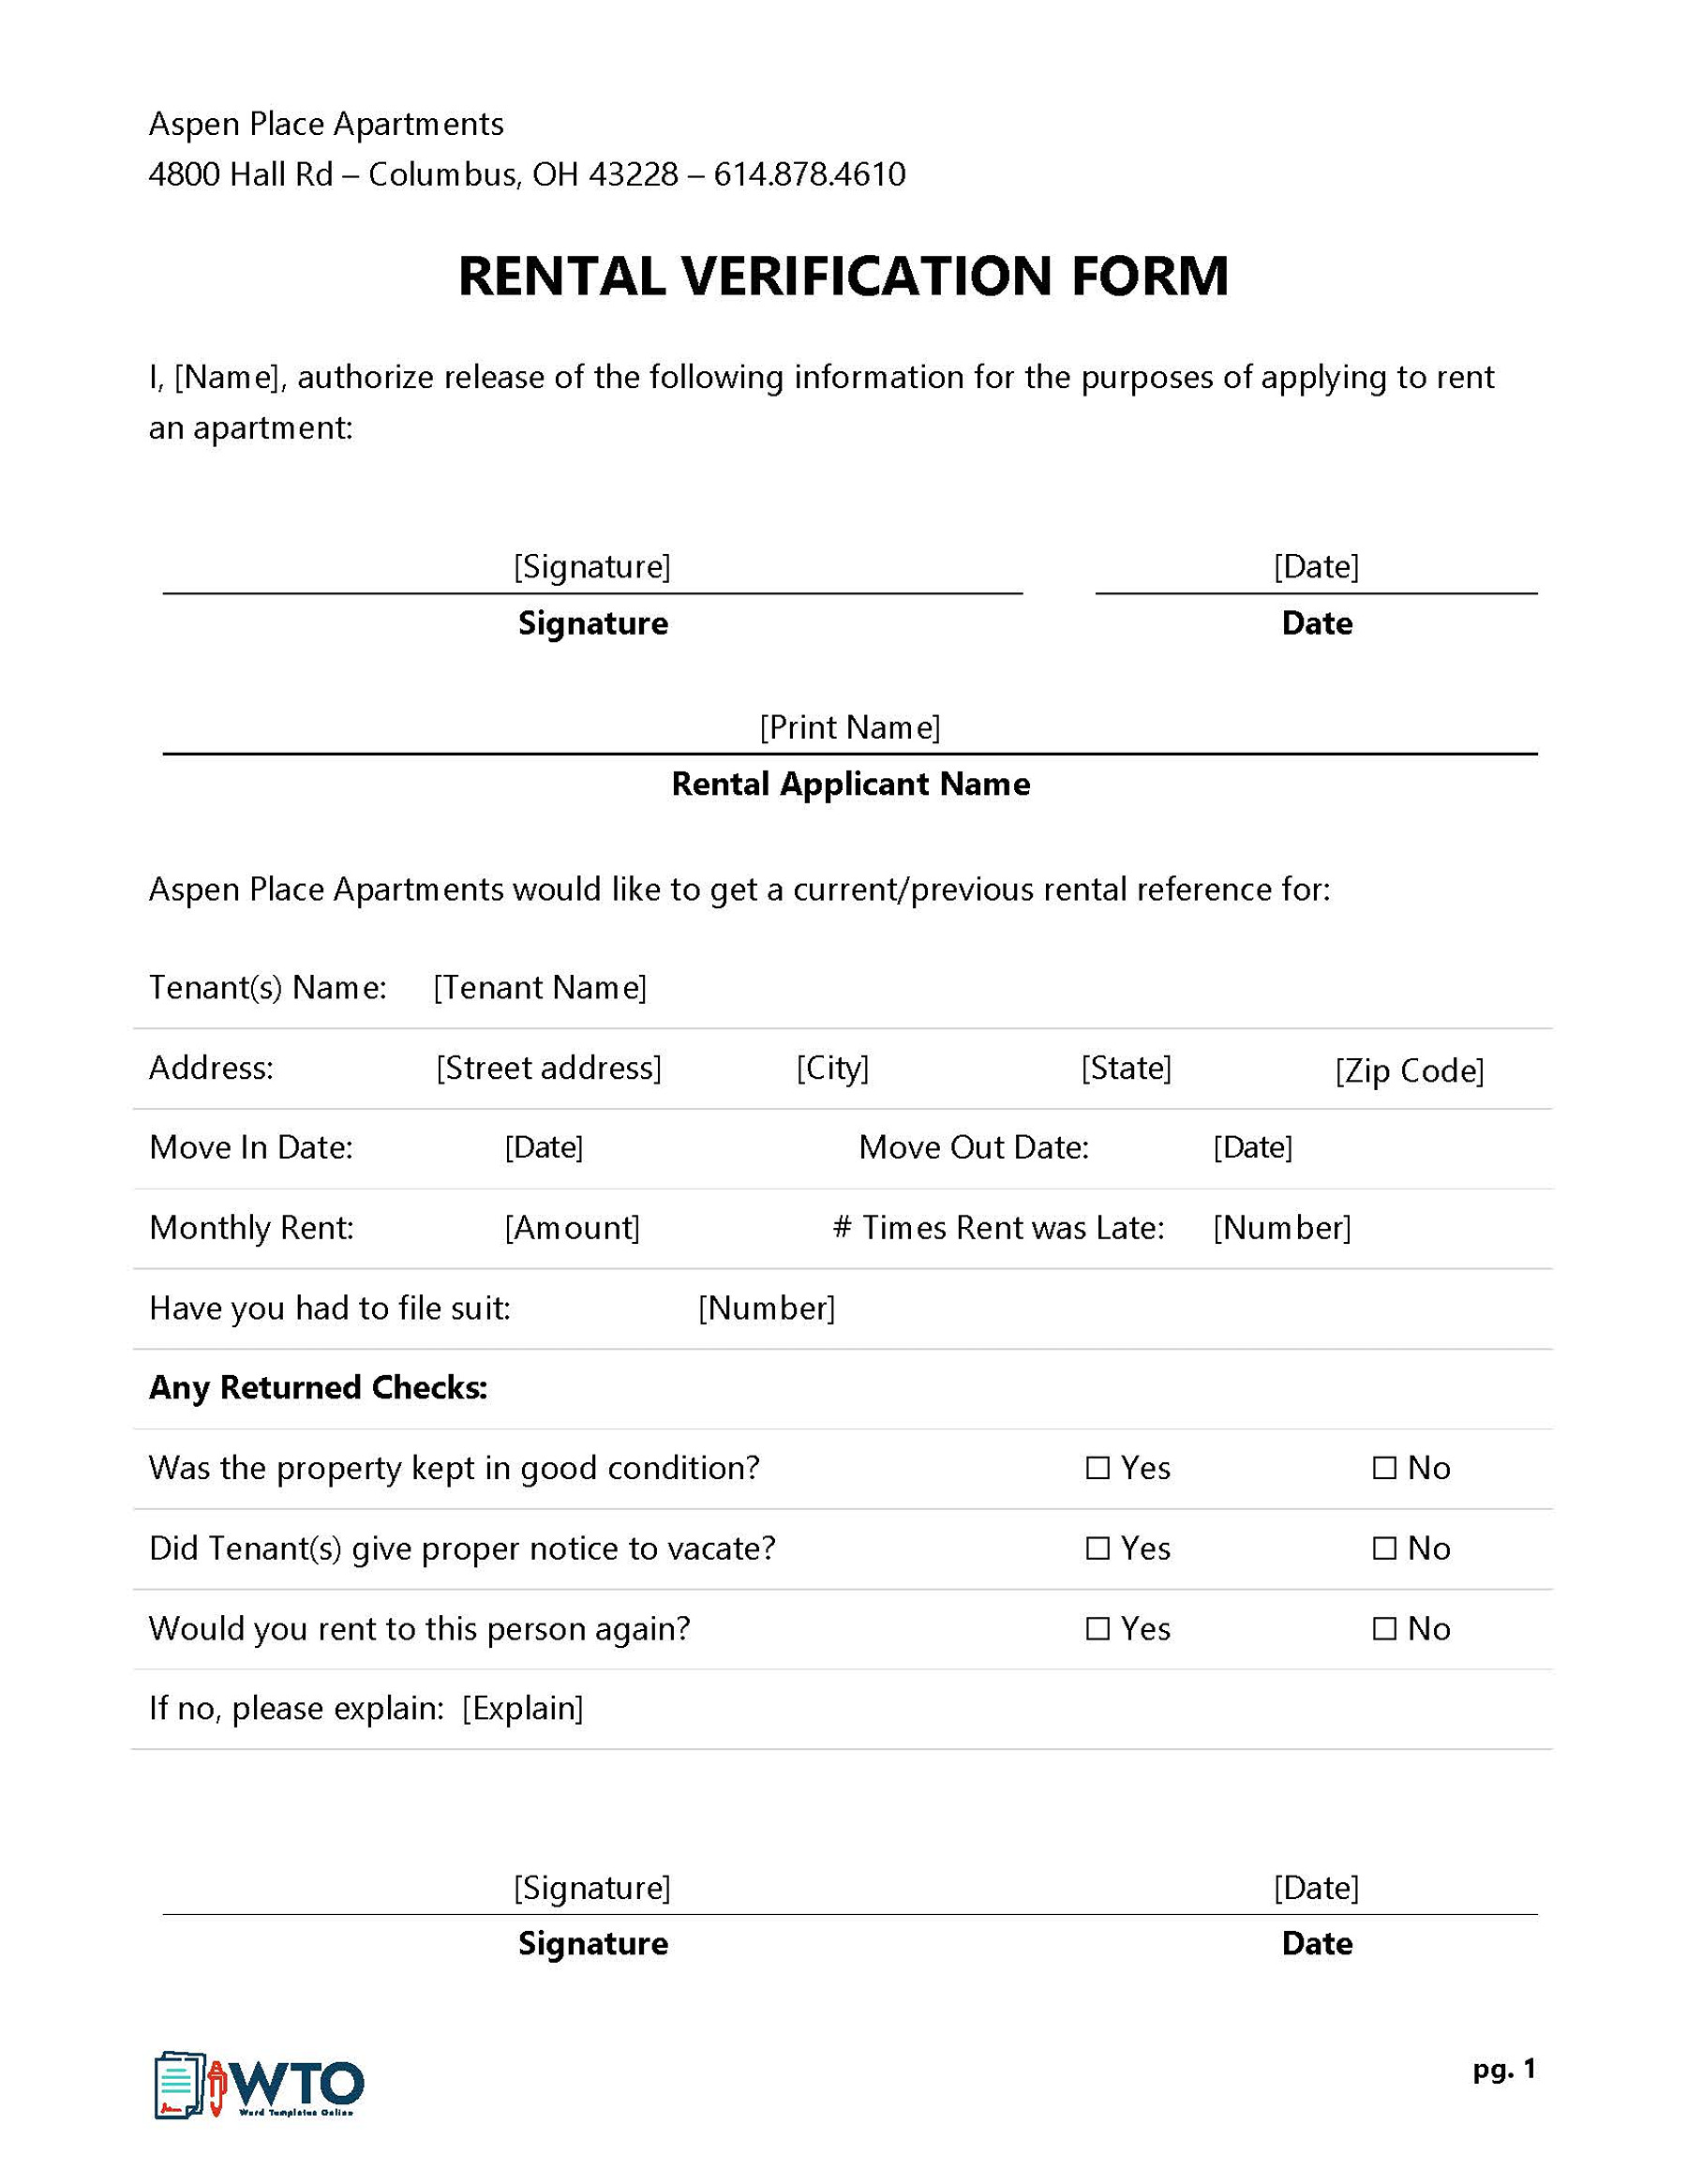 Downloadable Rental Verification Form Template - Word Format